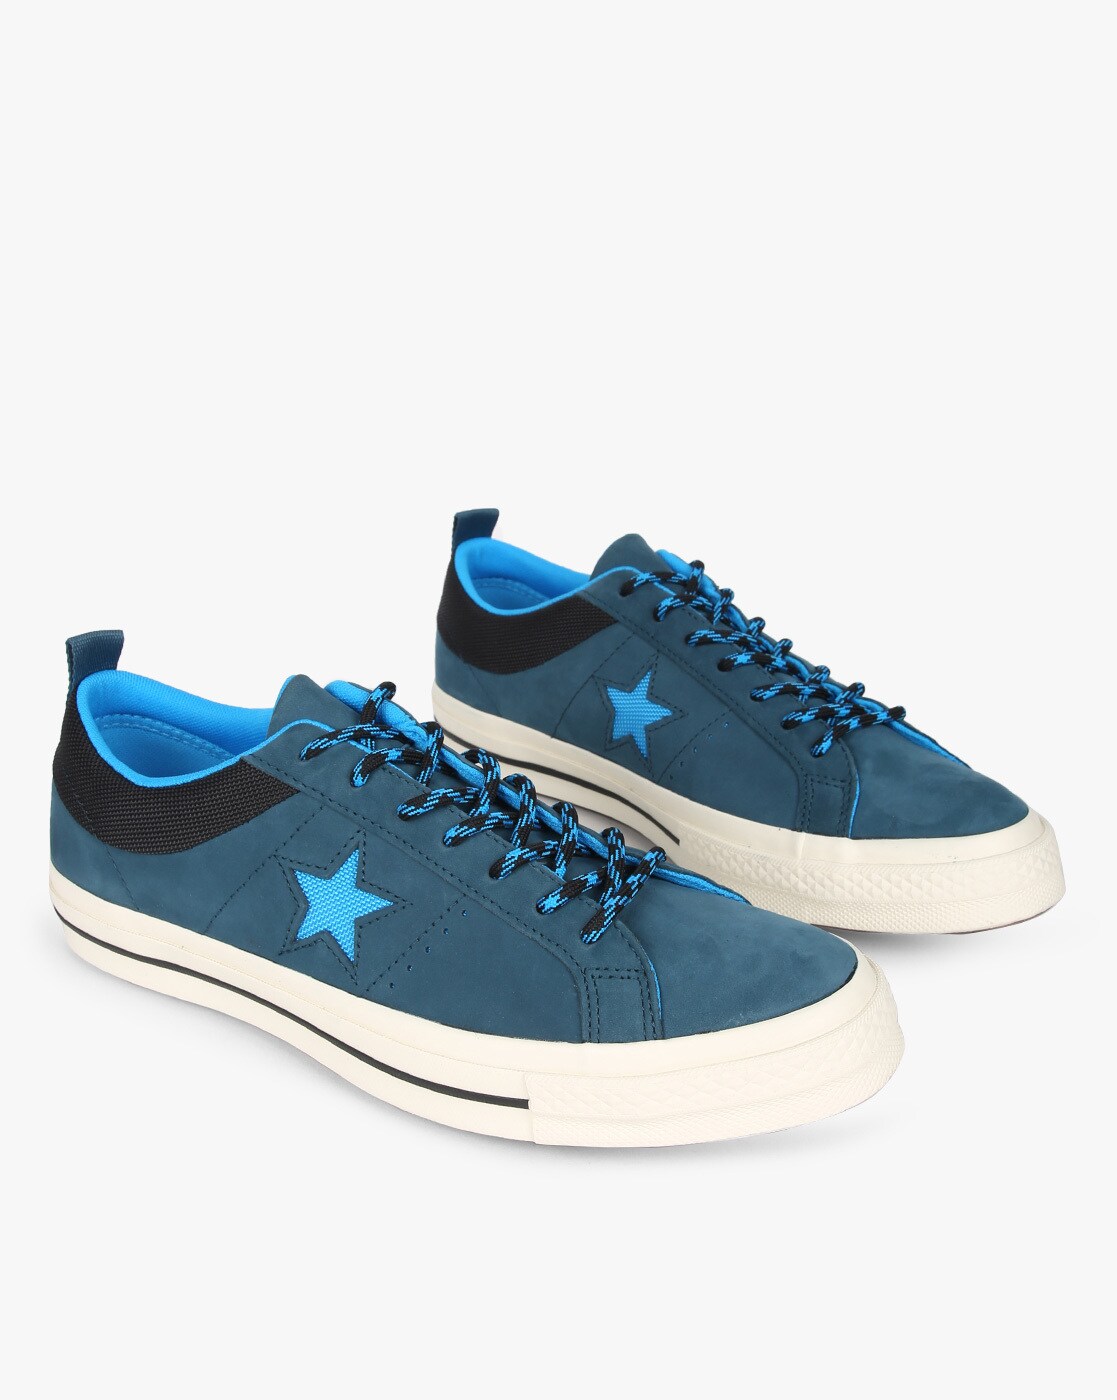 Buy Teal Blue Sneakers for Men by 